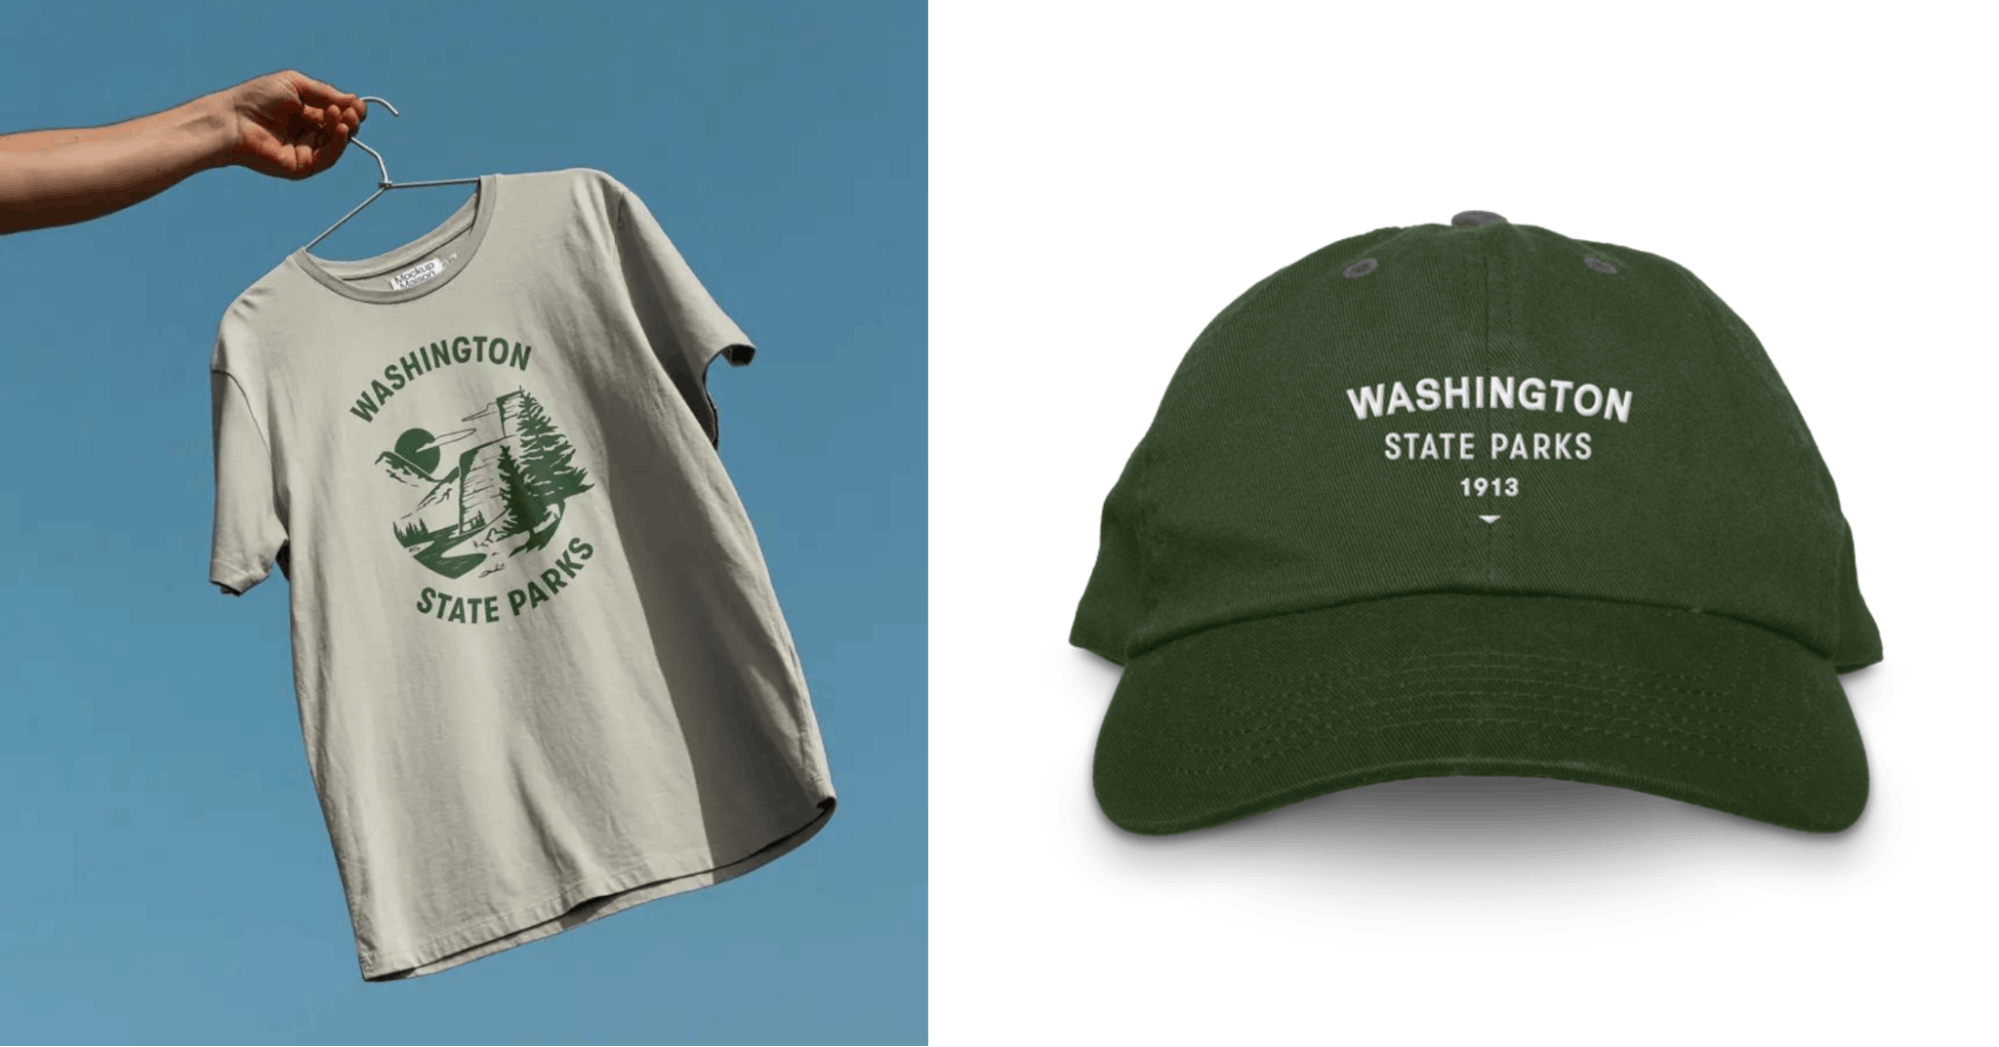 Washington State Parks merchandise